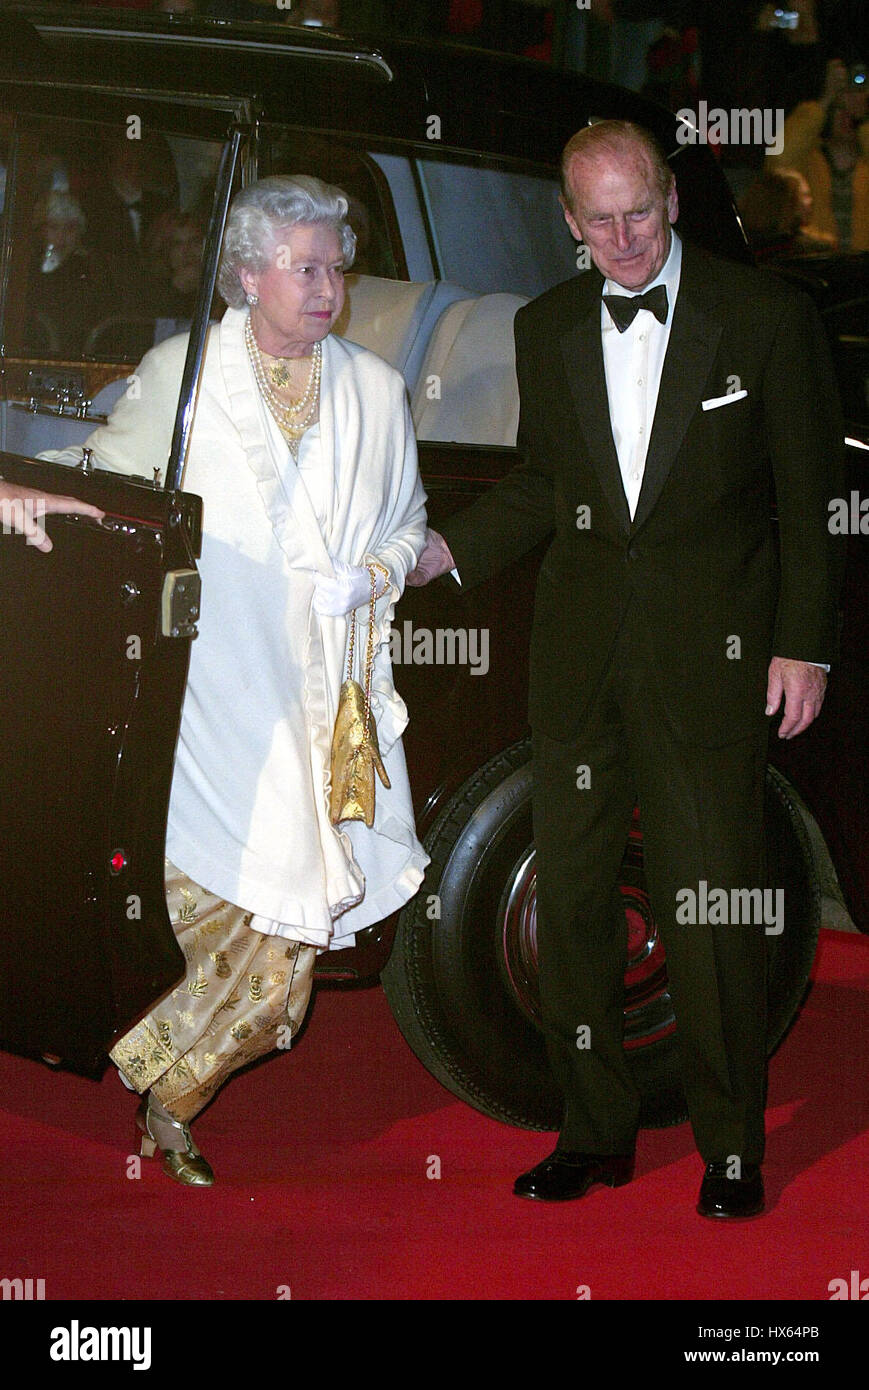 QUEEN ELIZABETH PRINCE PHILIP MEMBERS OF THE ROYAL FAMILY 18 November 2002 ROYAL ALBERT HALL LONDON ENGLAND Stock Photo